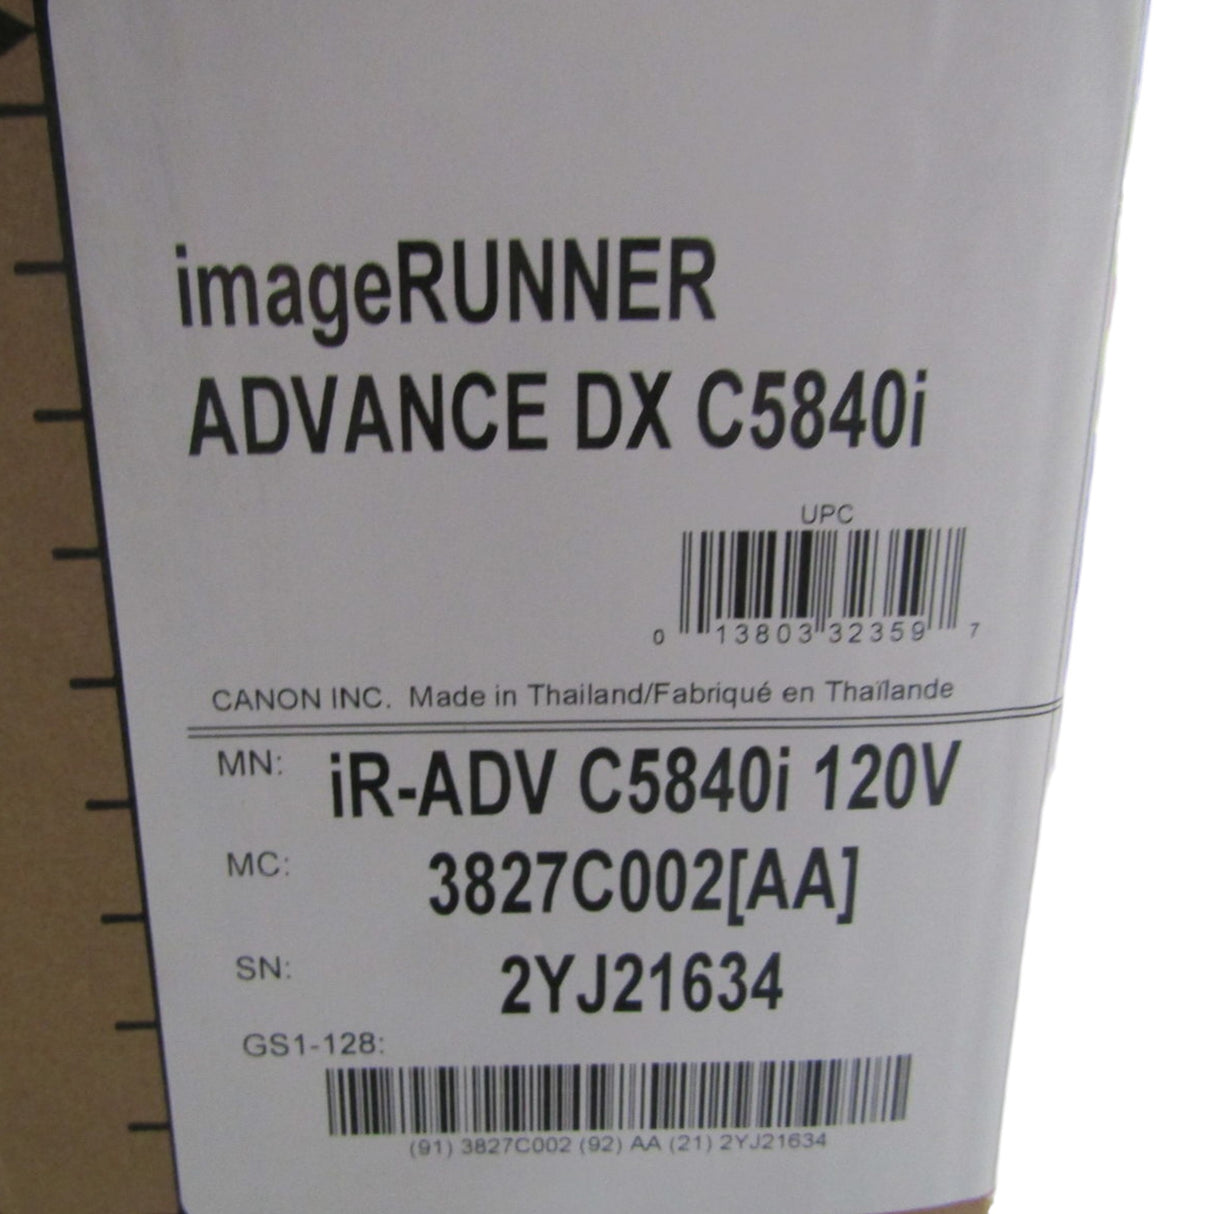 C5840i Genuine Canon ImageRunner Advance DX Multifunction Printer